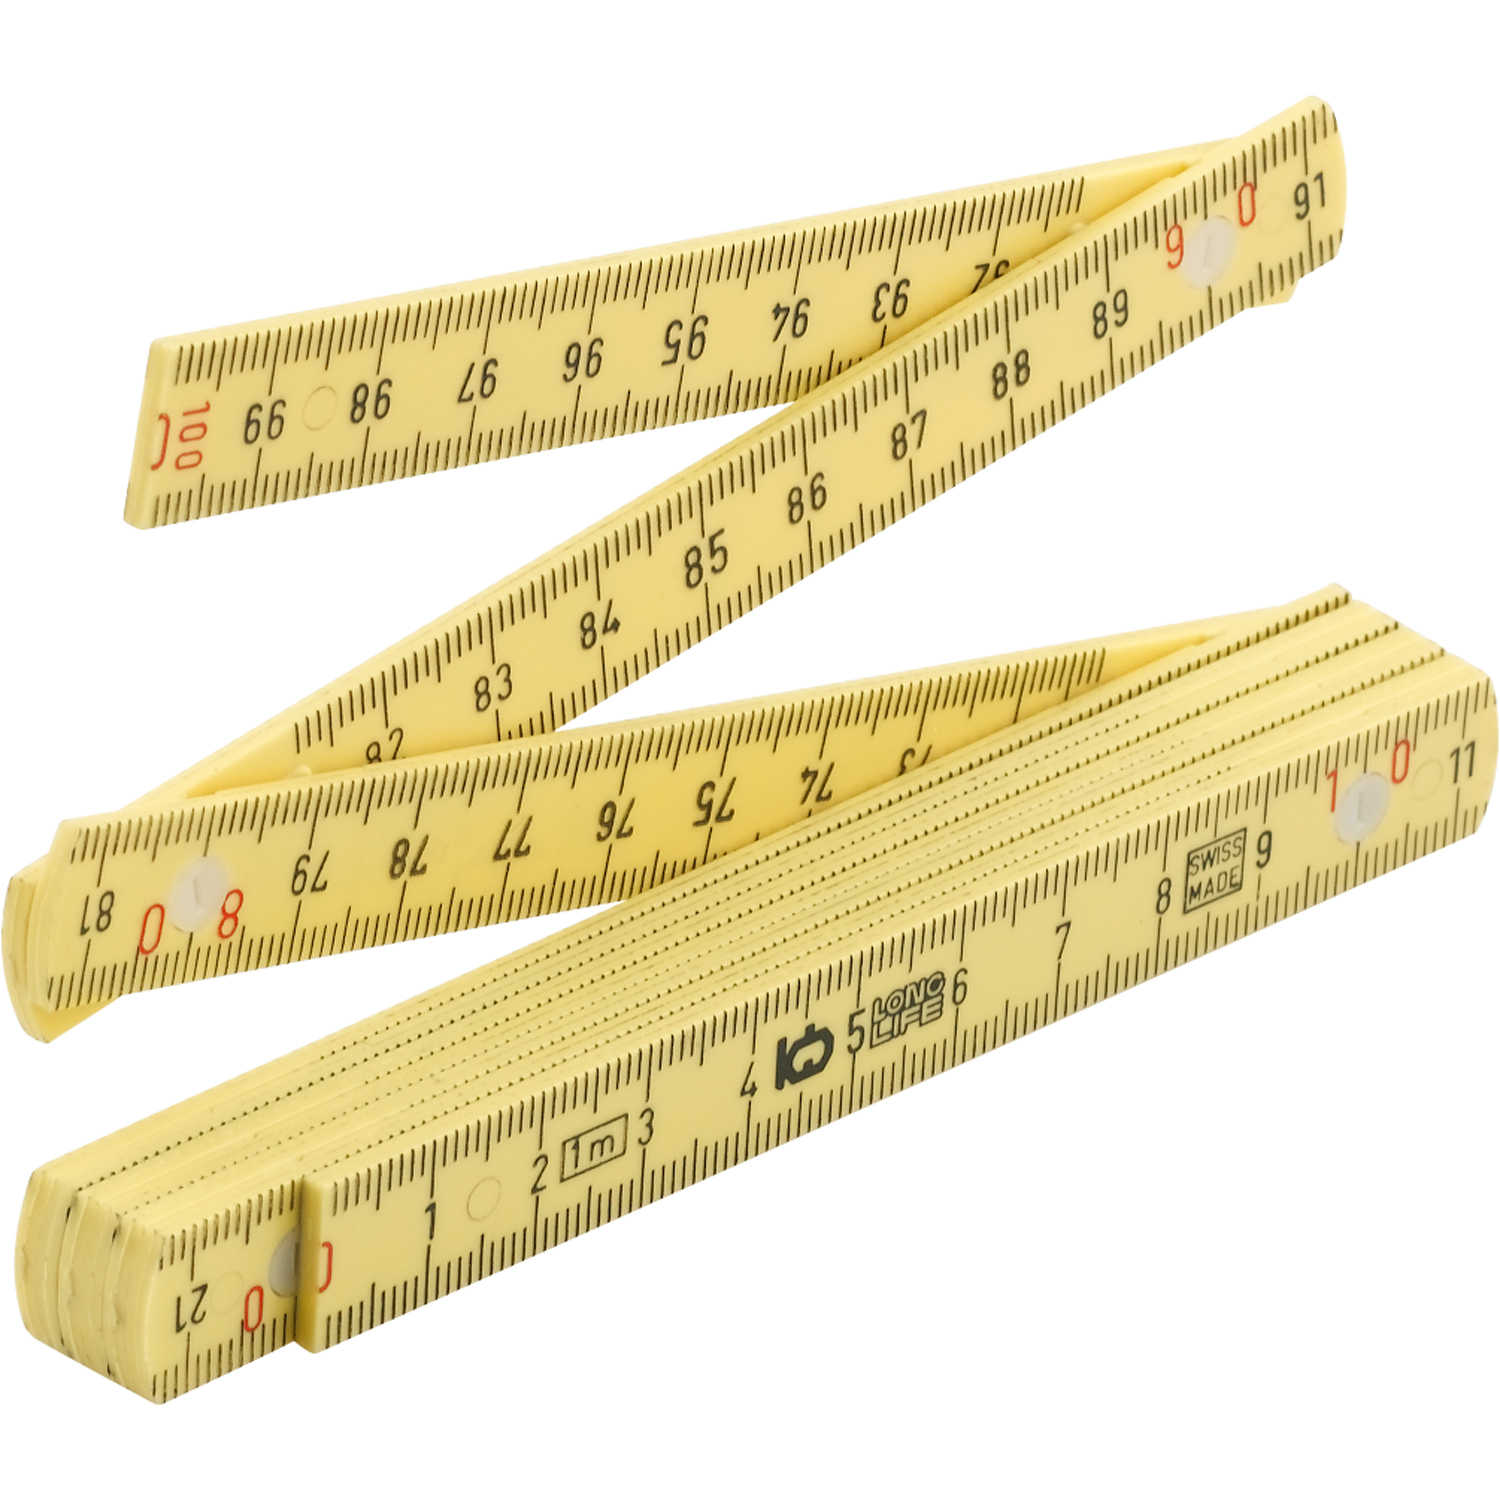 VILLCASE 5Pcs Carpenter Measuring Ruler Folding Slide Ruler Portable Measuring Stick Measuring Tool for Carpenters Woodworking 